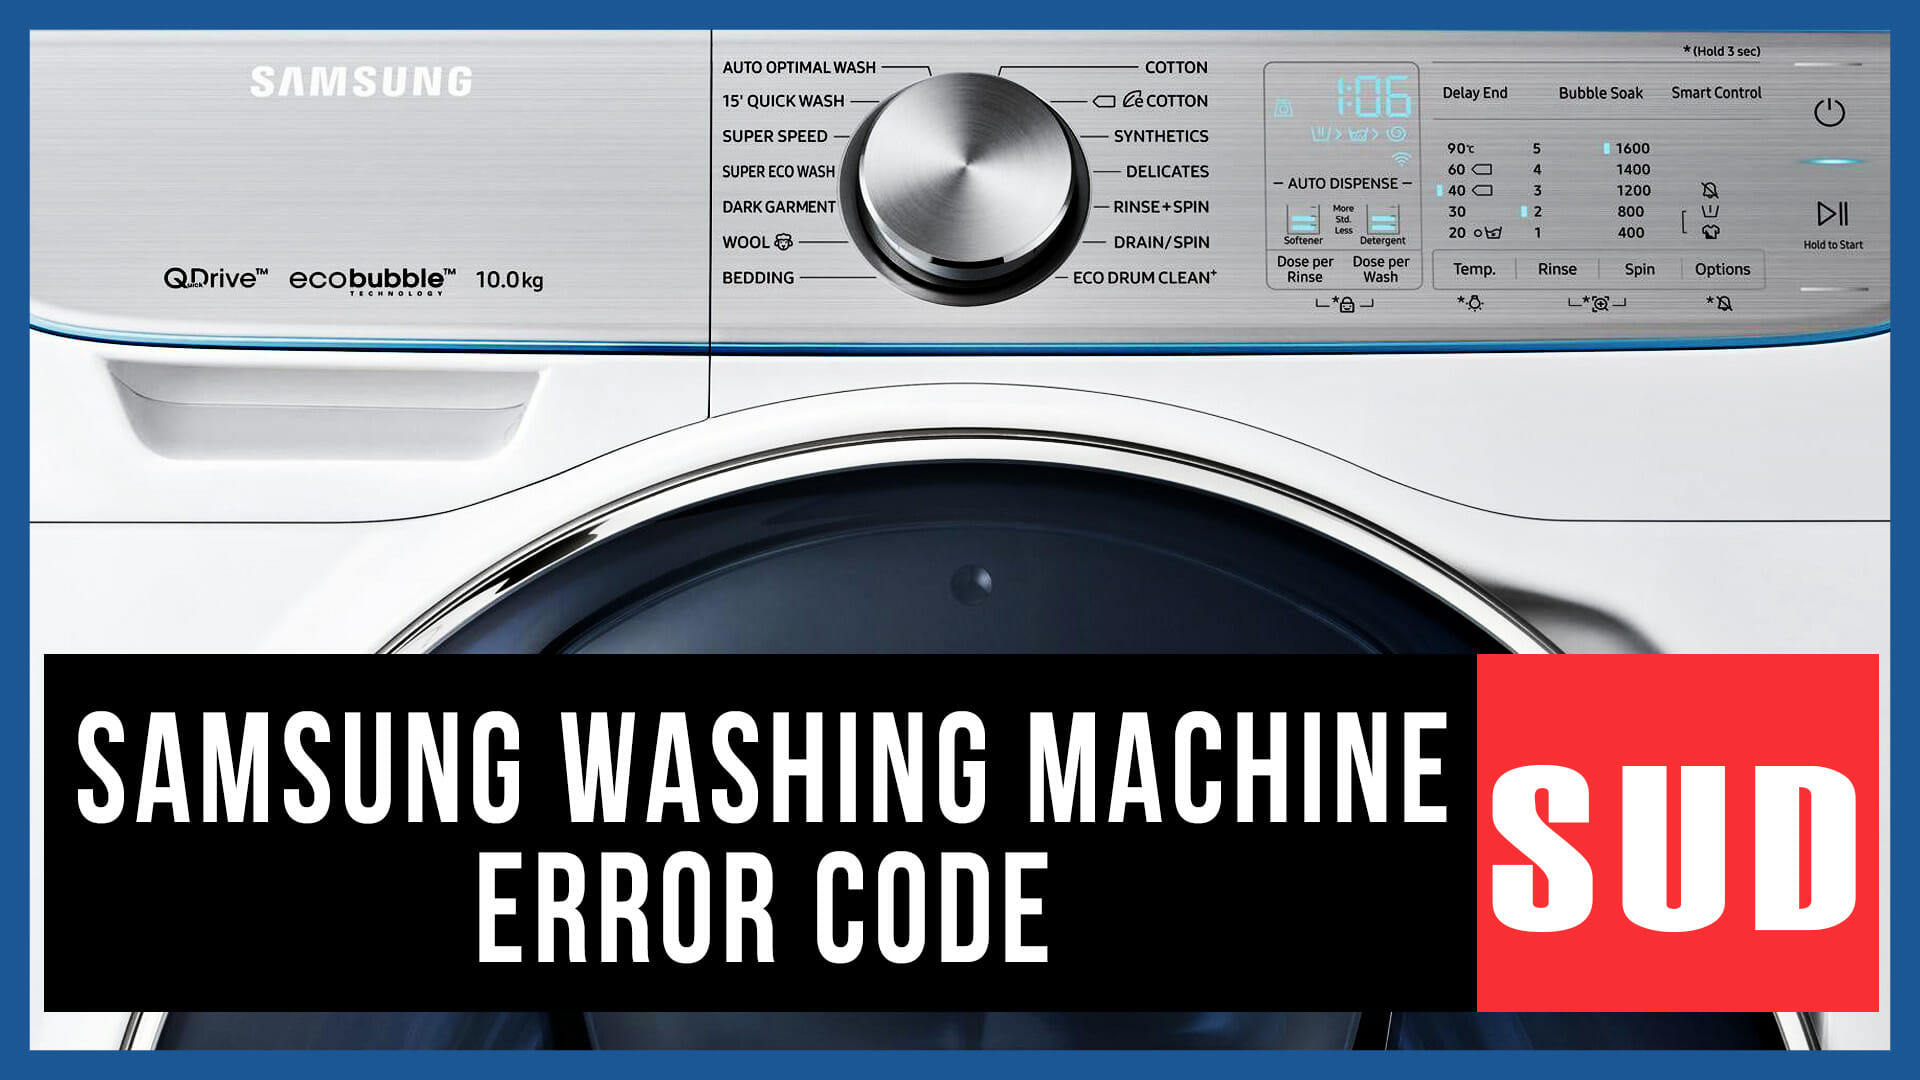 How to Fix Sud Error on Samsung Washing Machine?